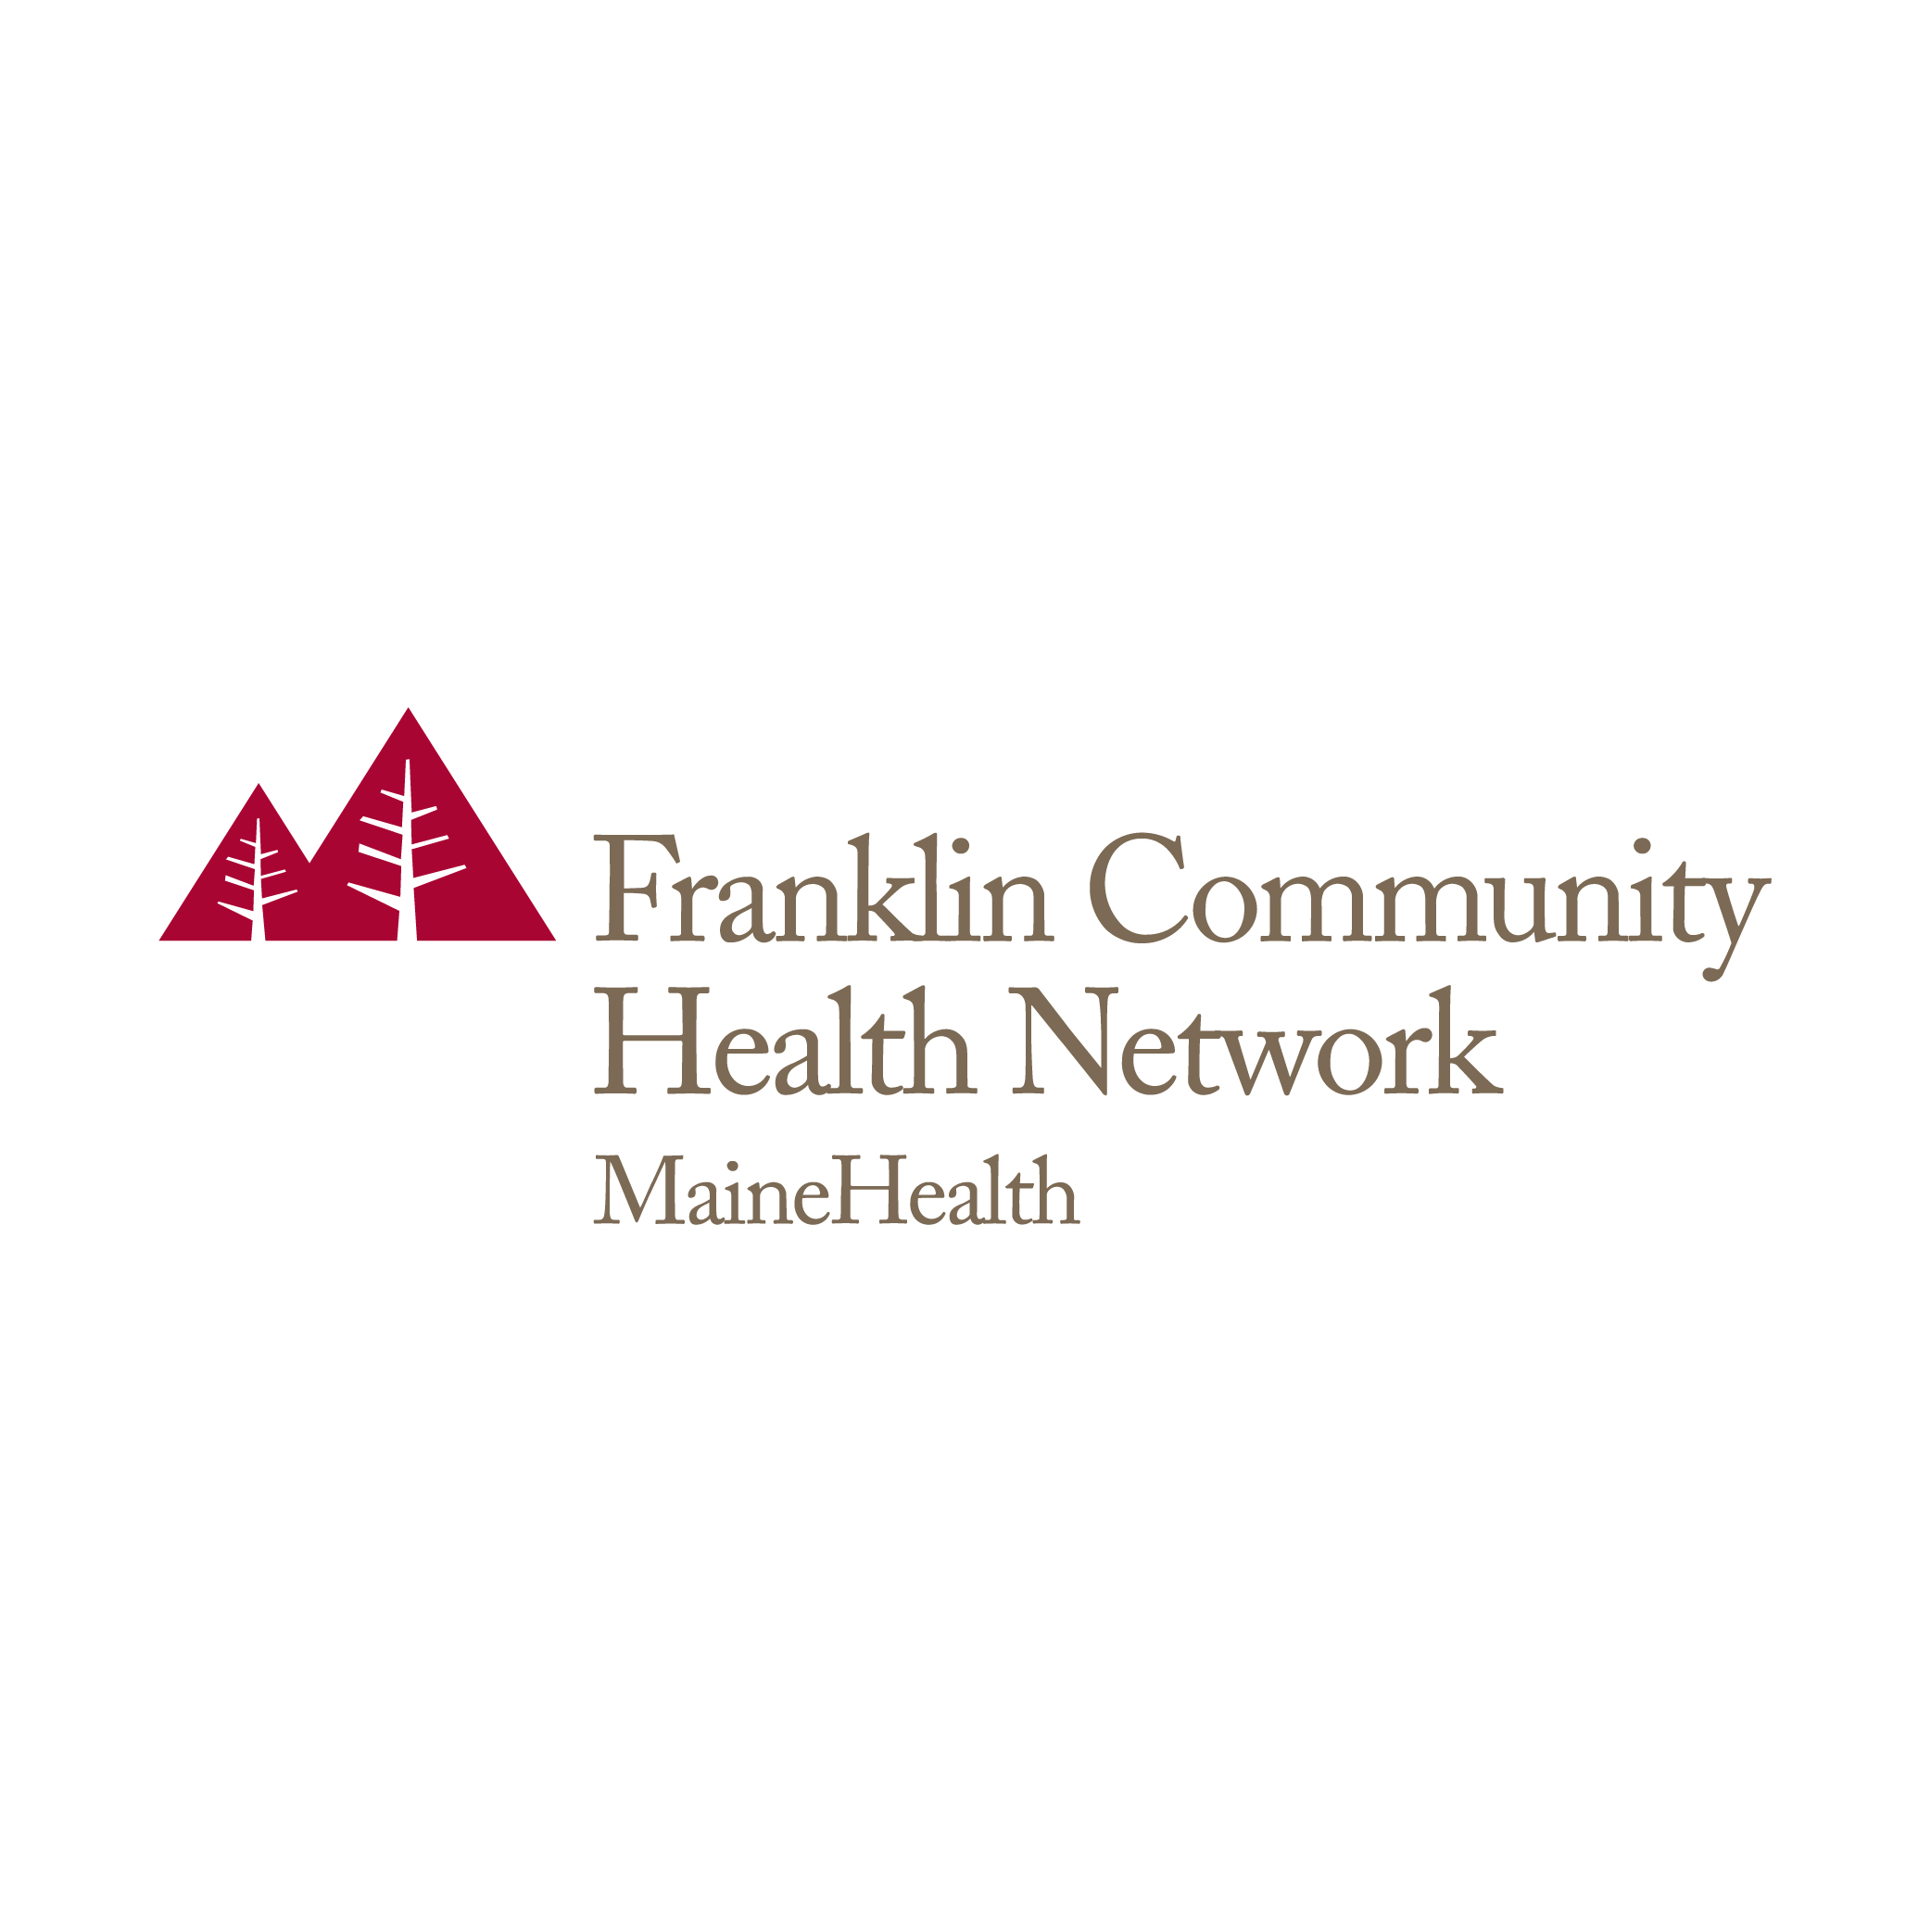 Franking Community Health Network of MaineHealth logo